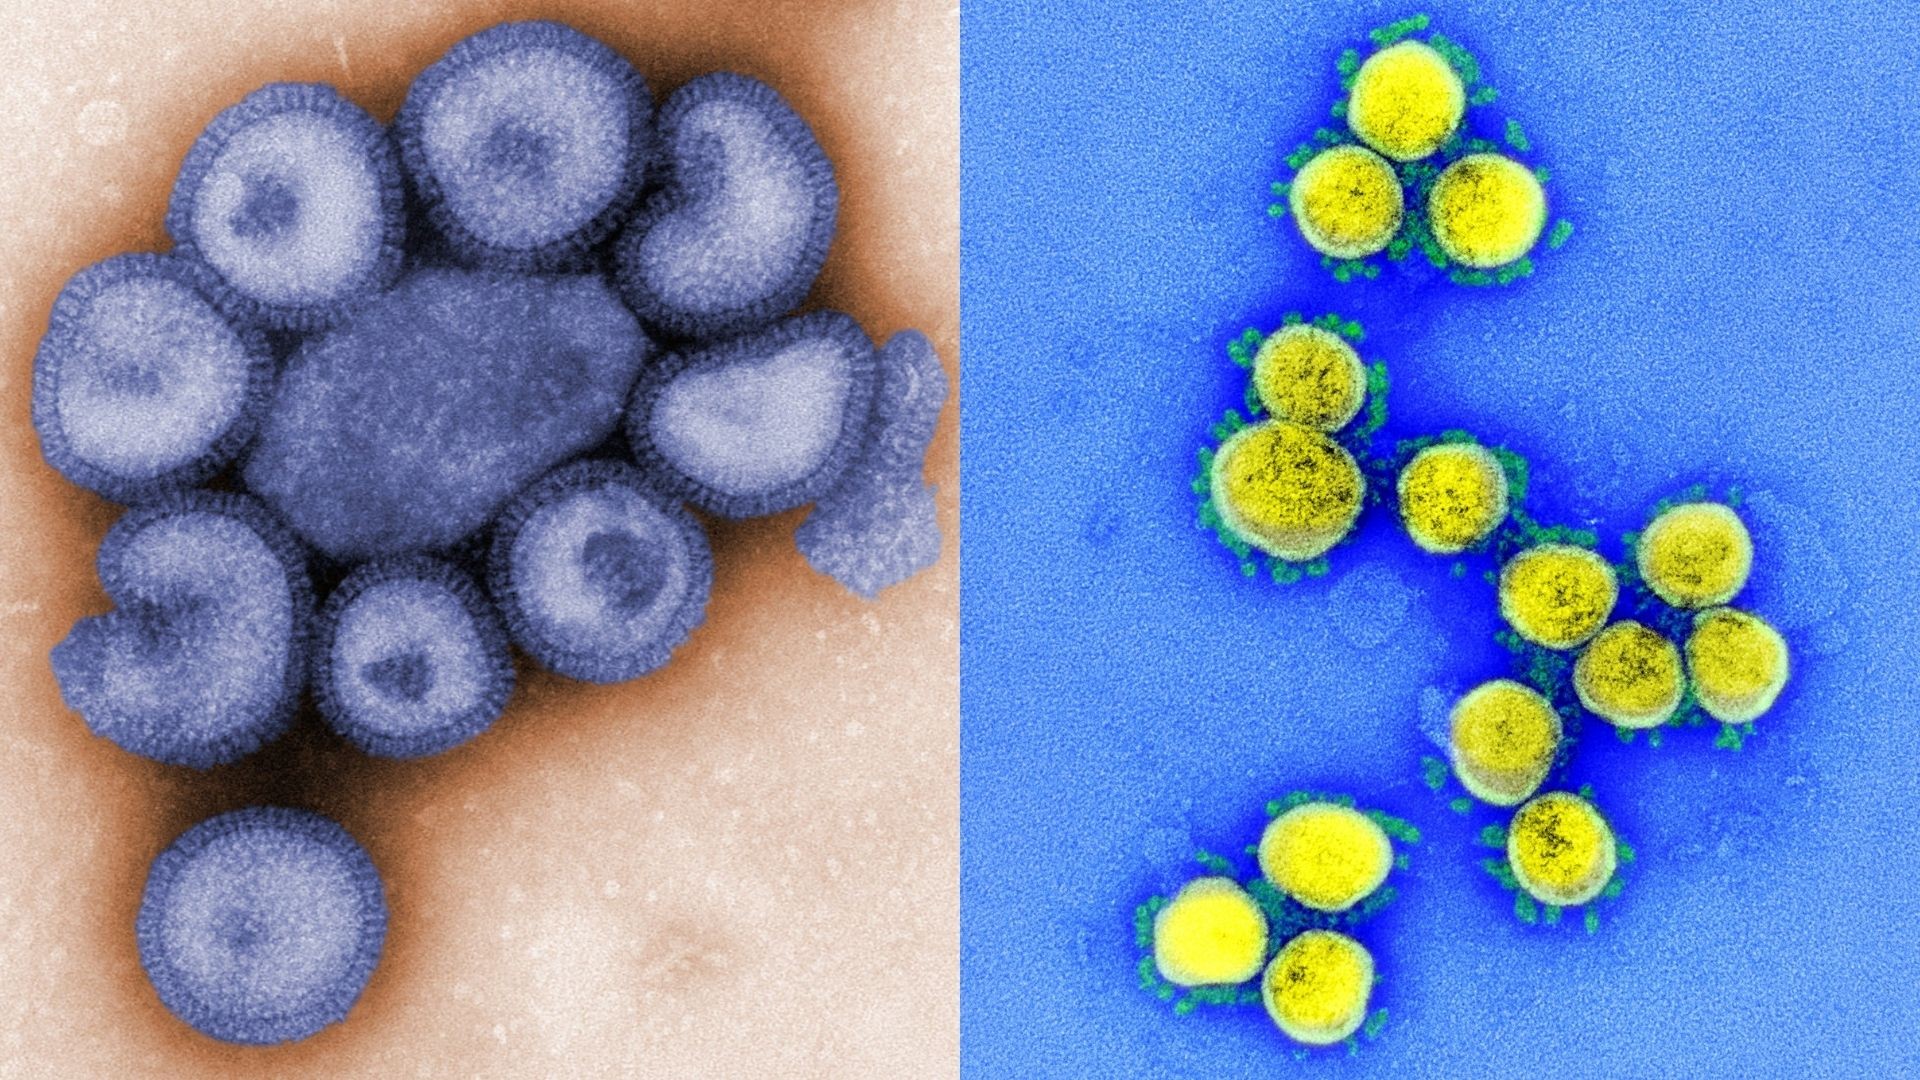 Israel confirmou seu primeiro caso simultâneo de gripe e Covid-19  (Foto: NIAD)